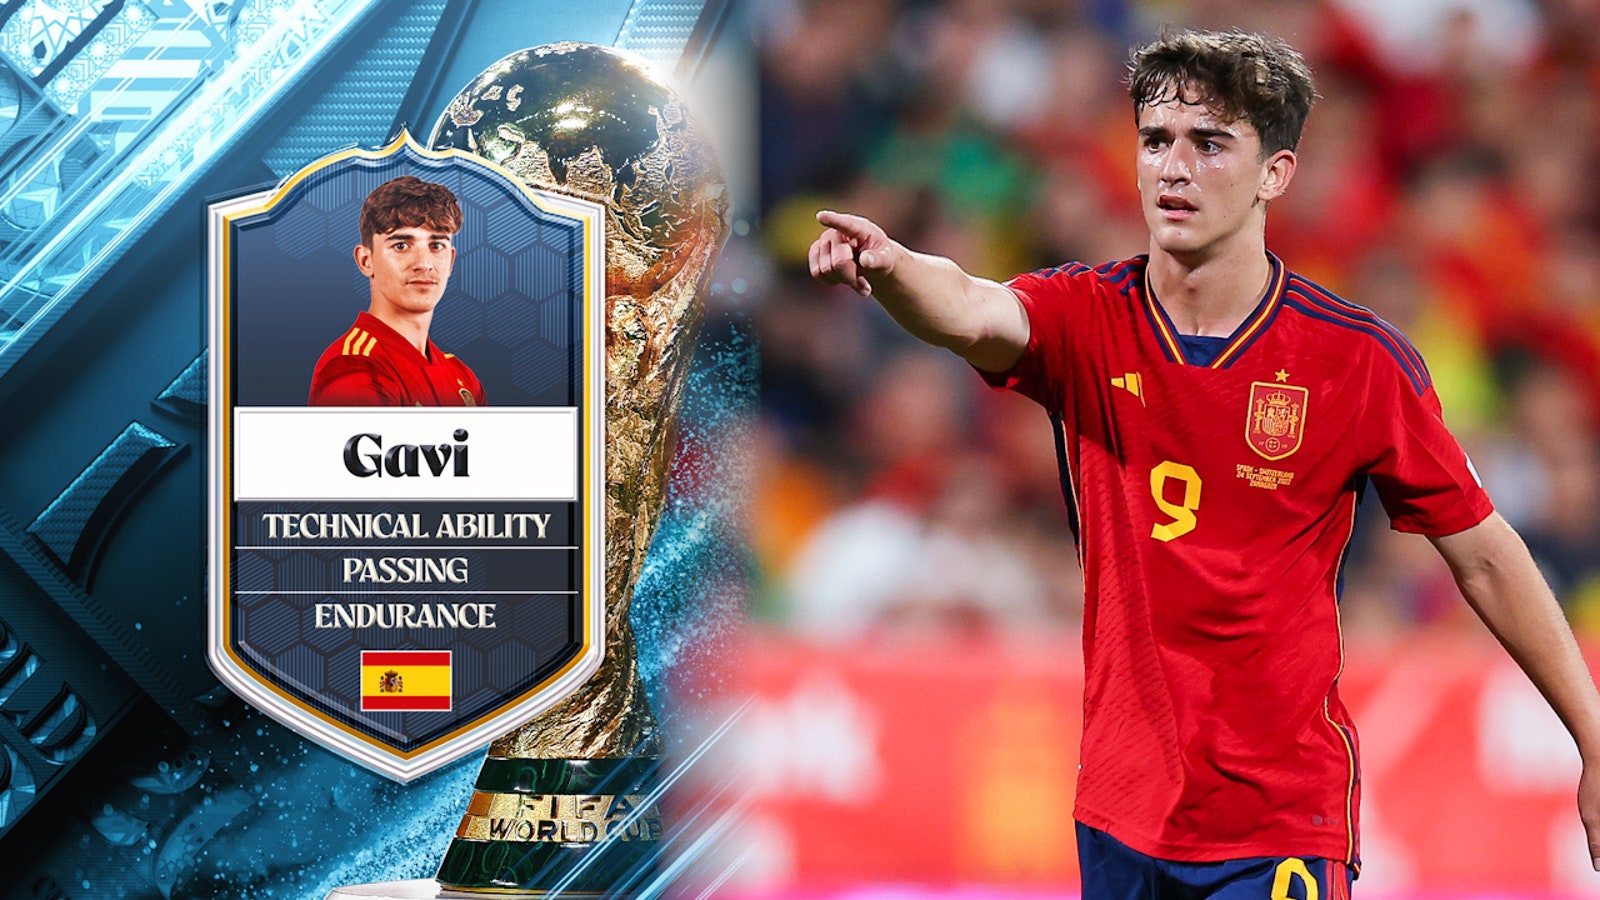 Spain's second Golden Boy